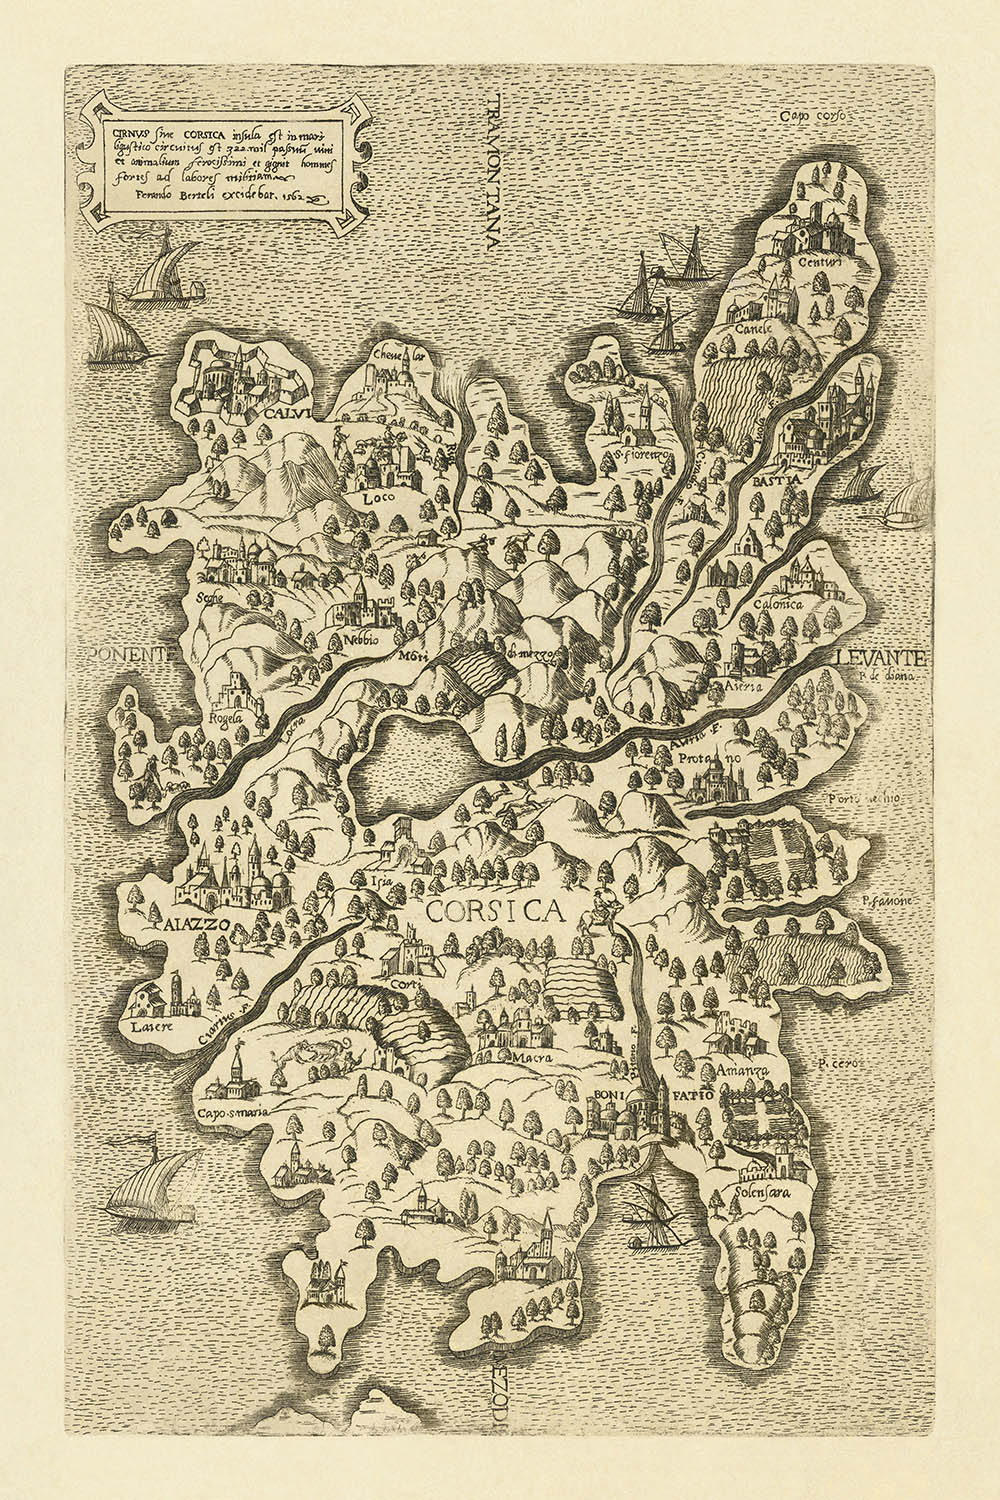 Old Map of Corsica by Bertelli, 1562: Ancient Atlas, Bastia, Bonifacio, Elegant Sailboats, Cultivated Fields